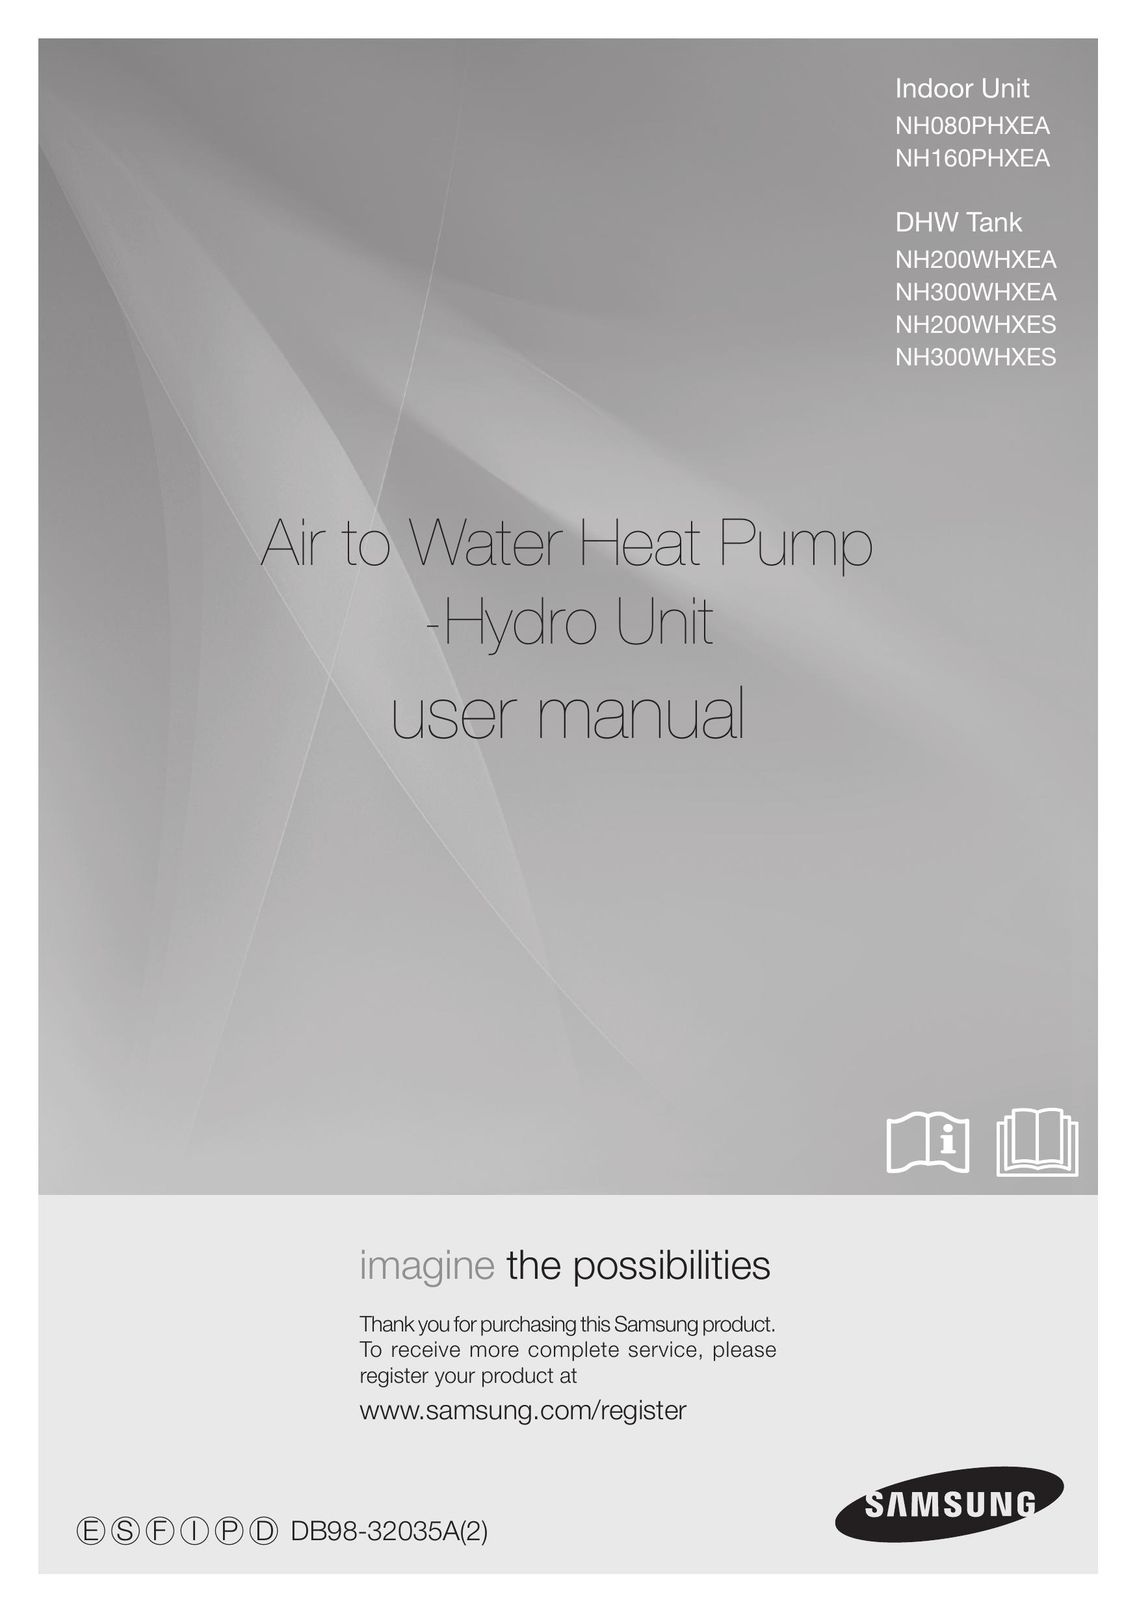 Samsung NH300WHXES Heat Pump User Manual